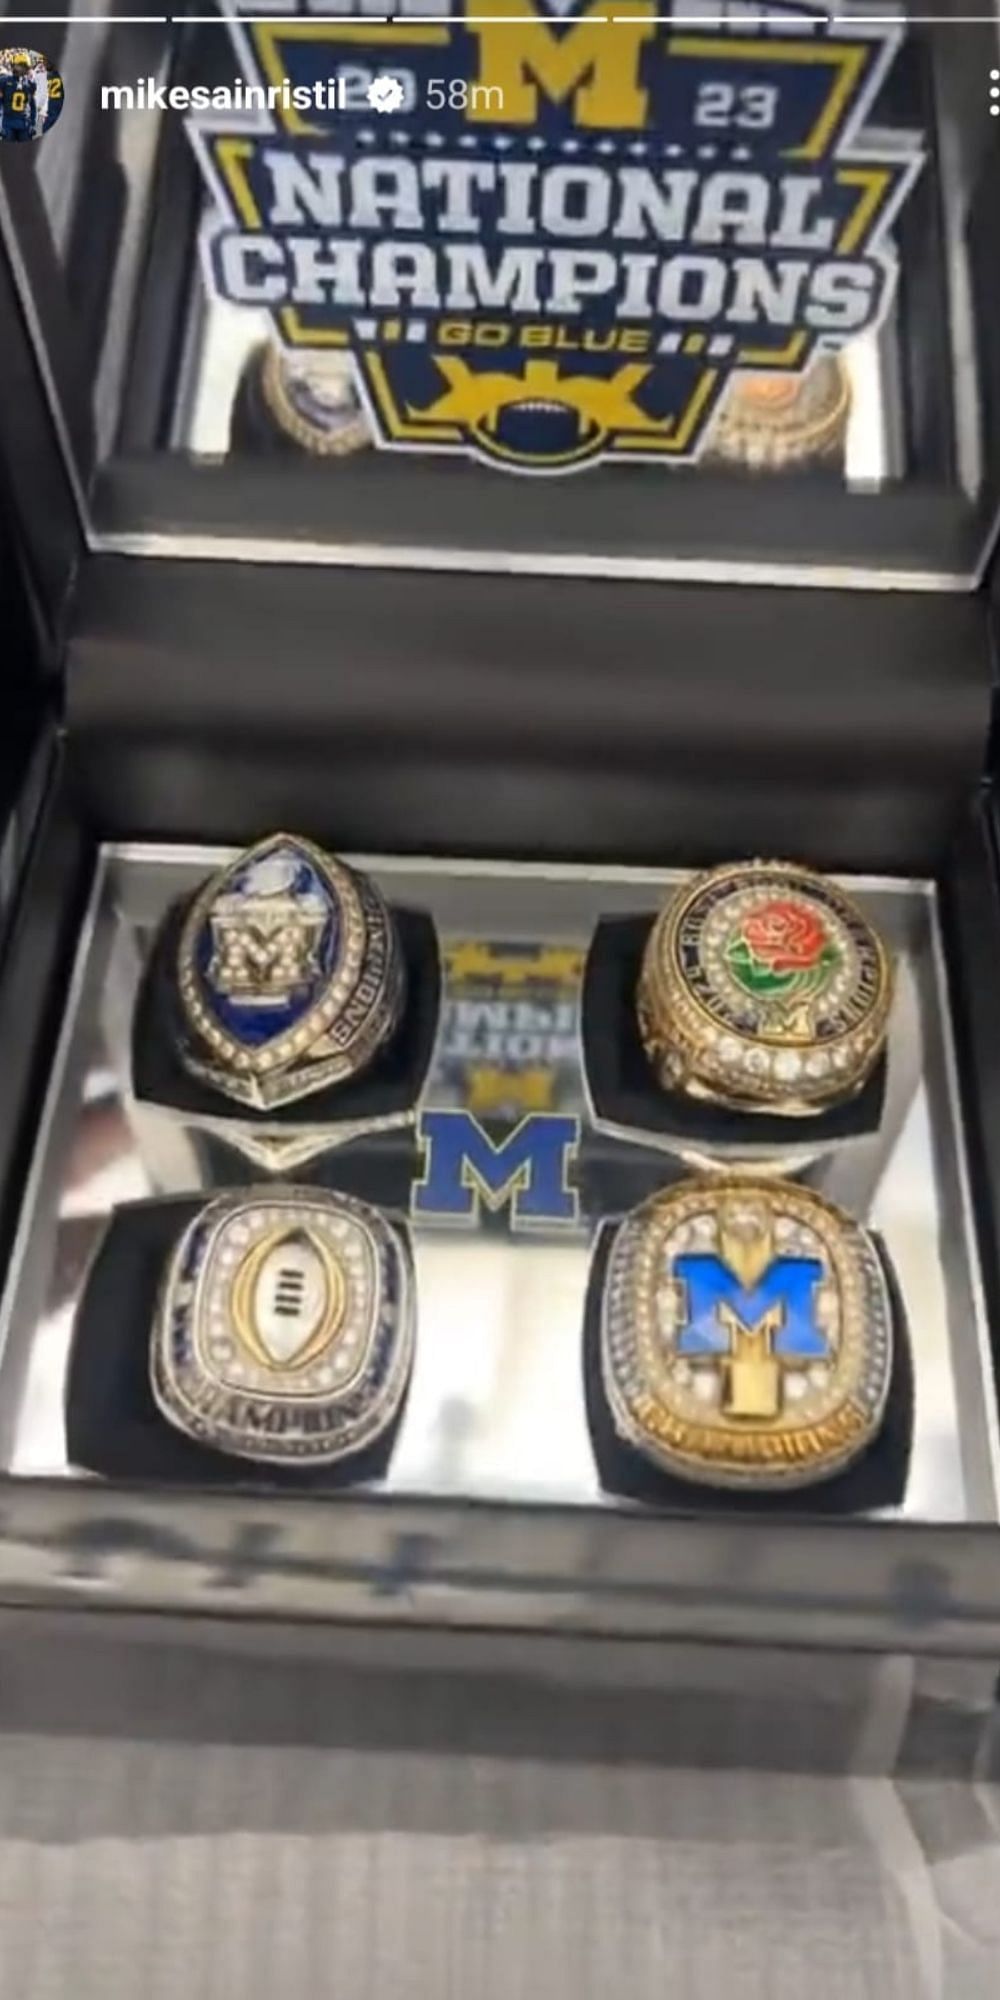 The new Michigan national championship rings.